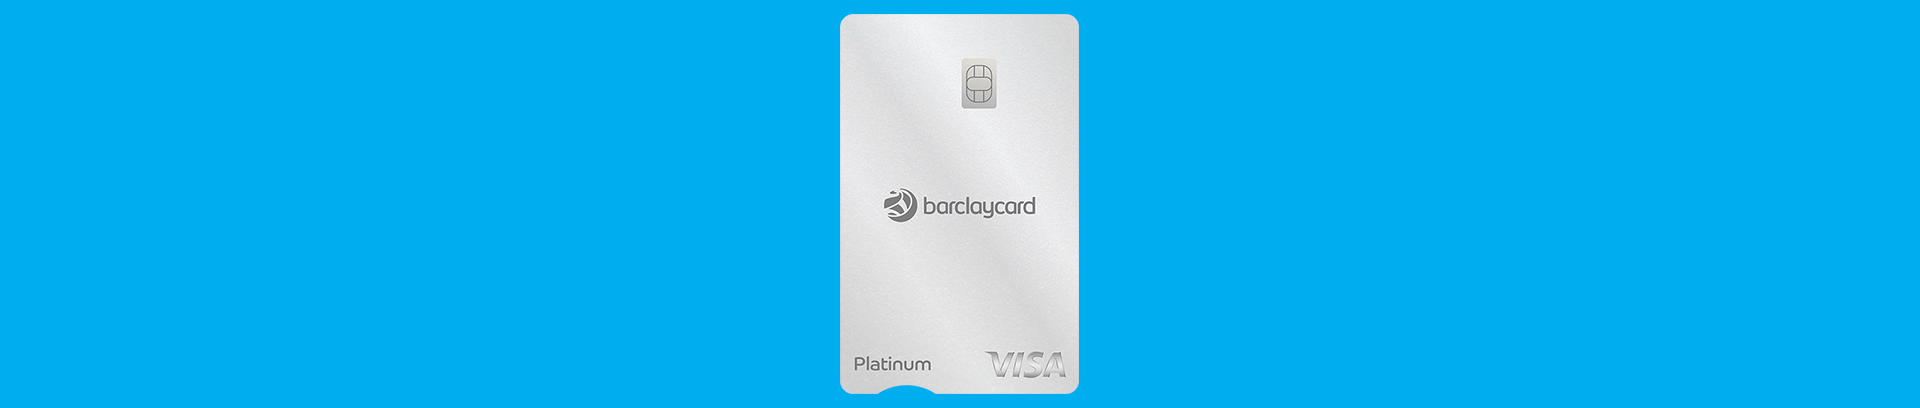 Simon Bird holding a Barclaycard balance transfer card